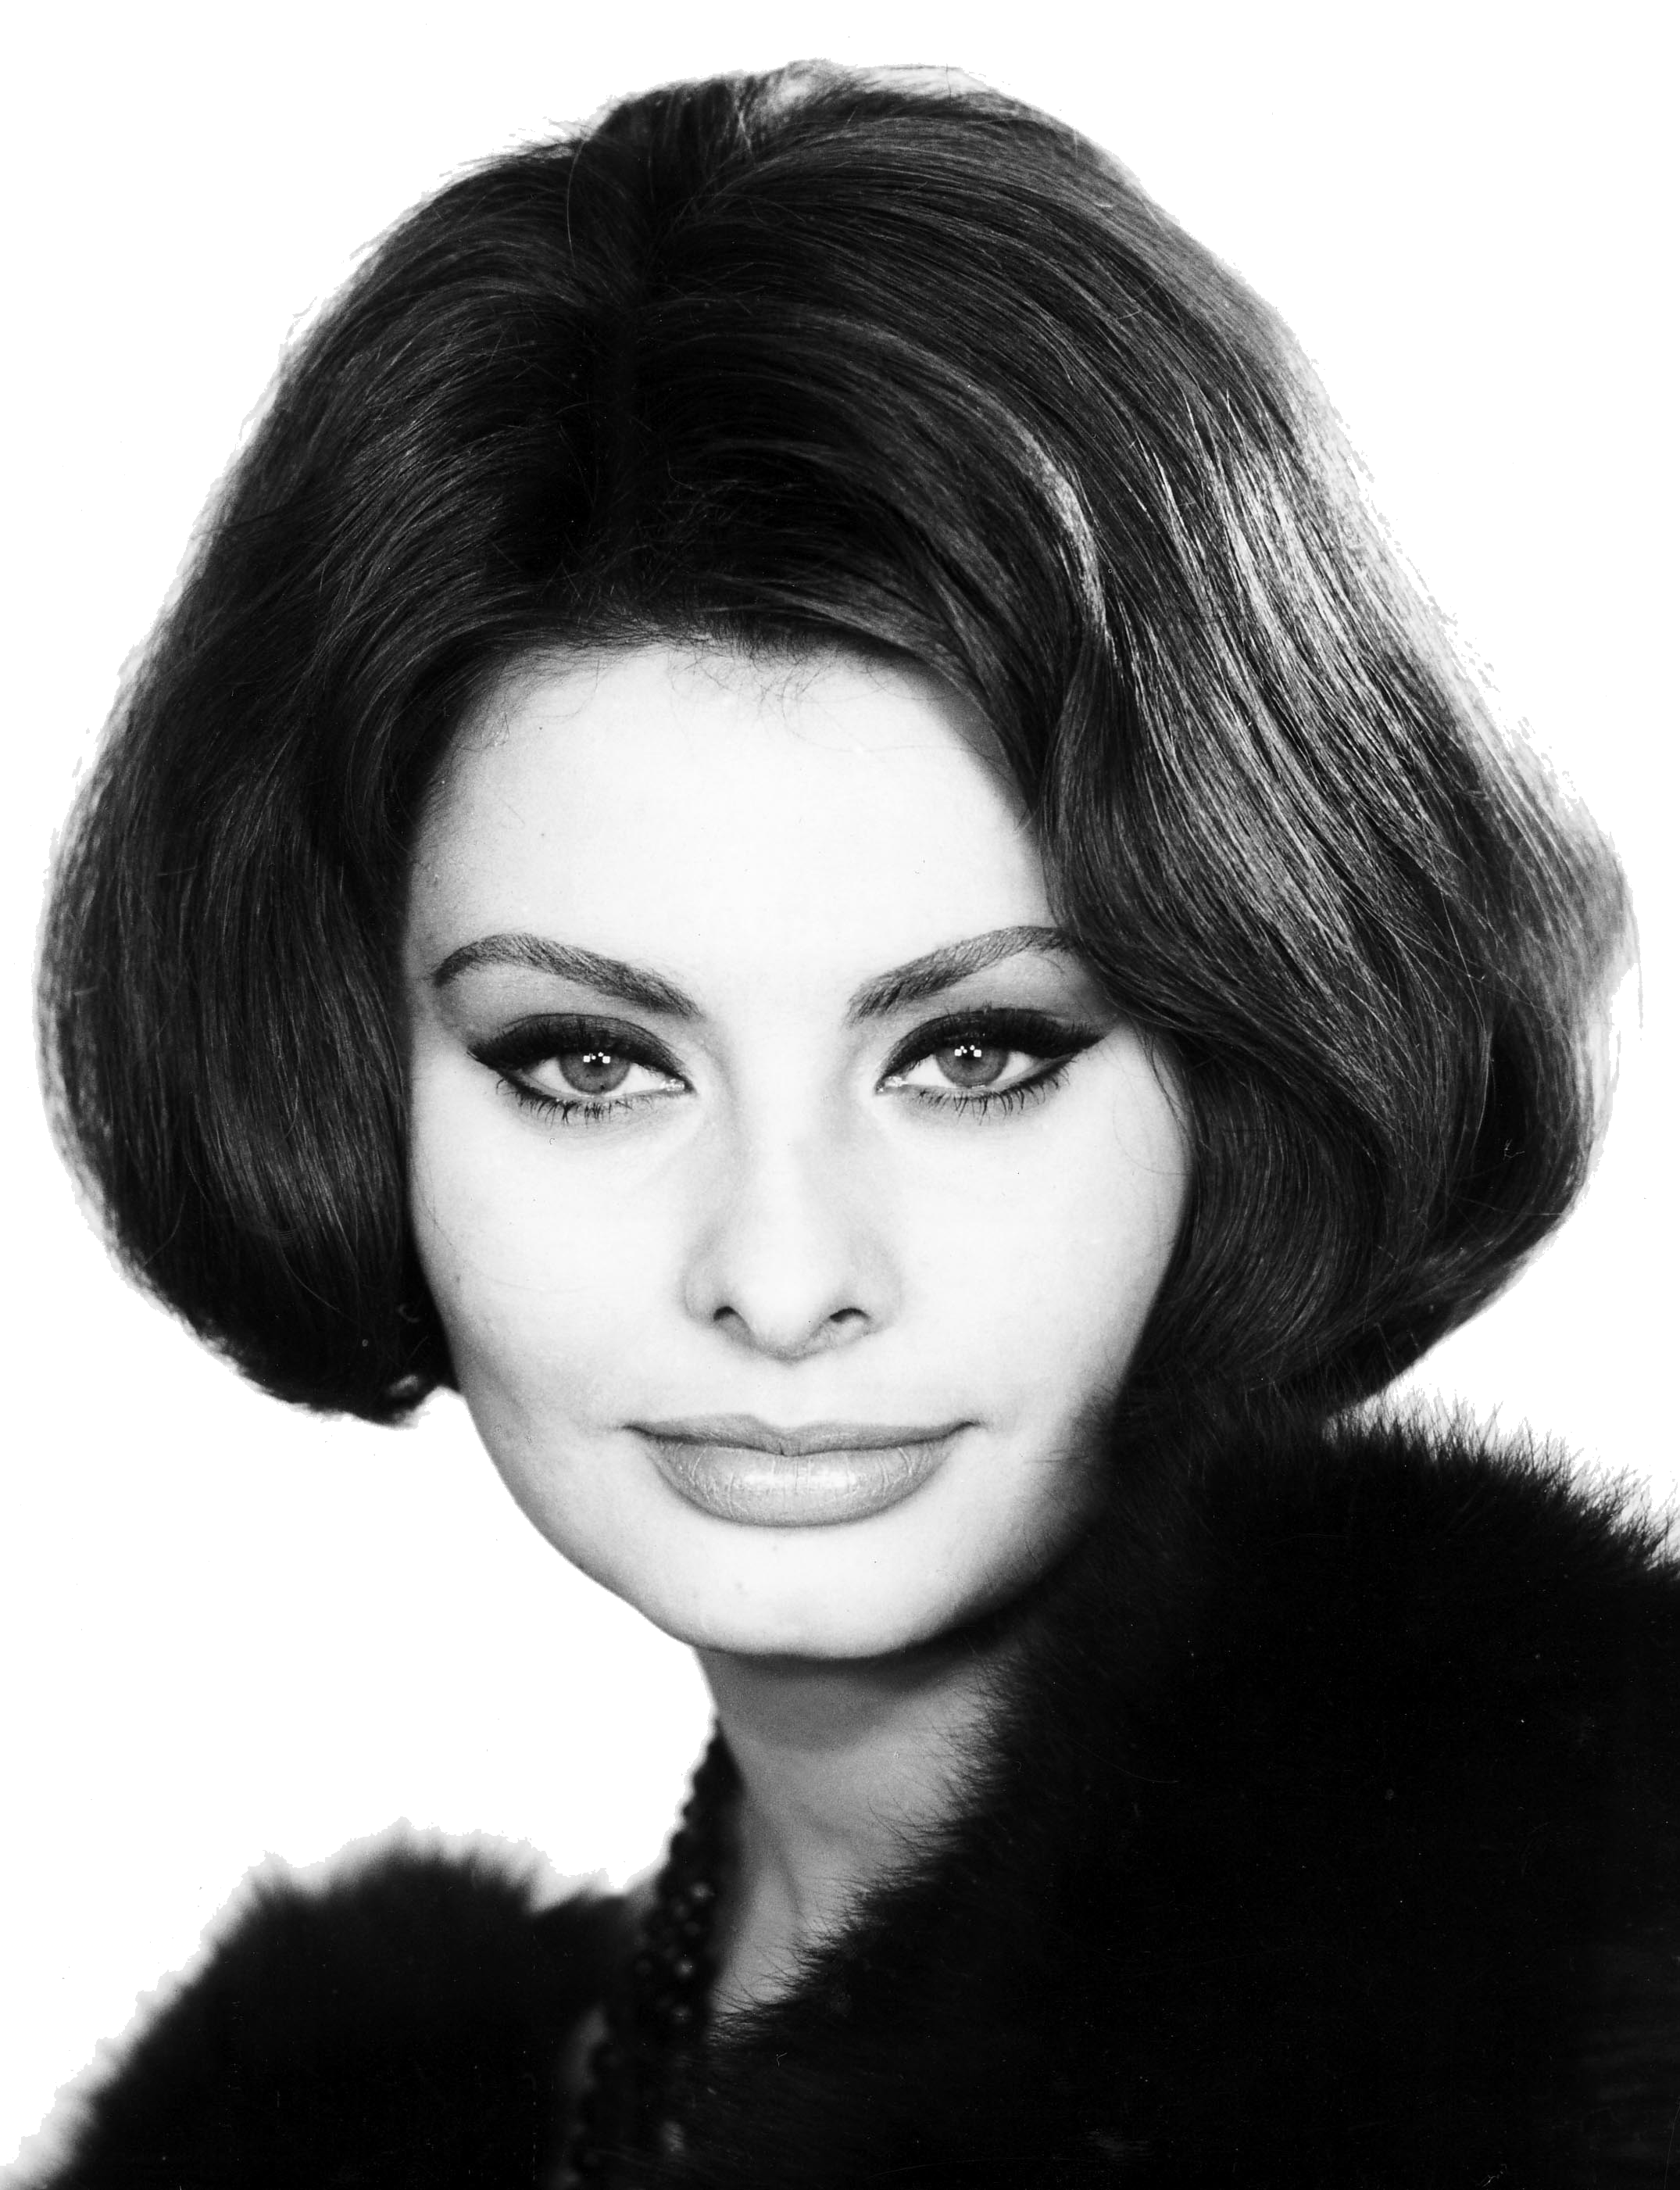 Sophia Loren Side View transparent PNG.